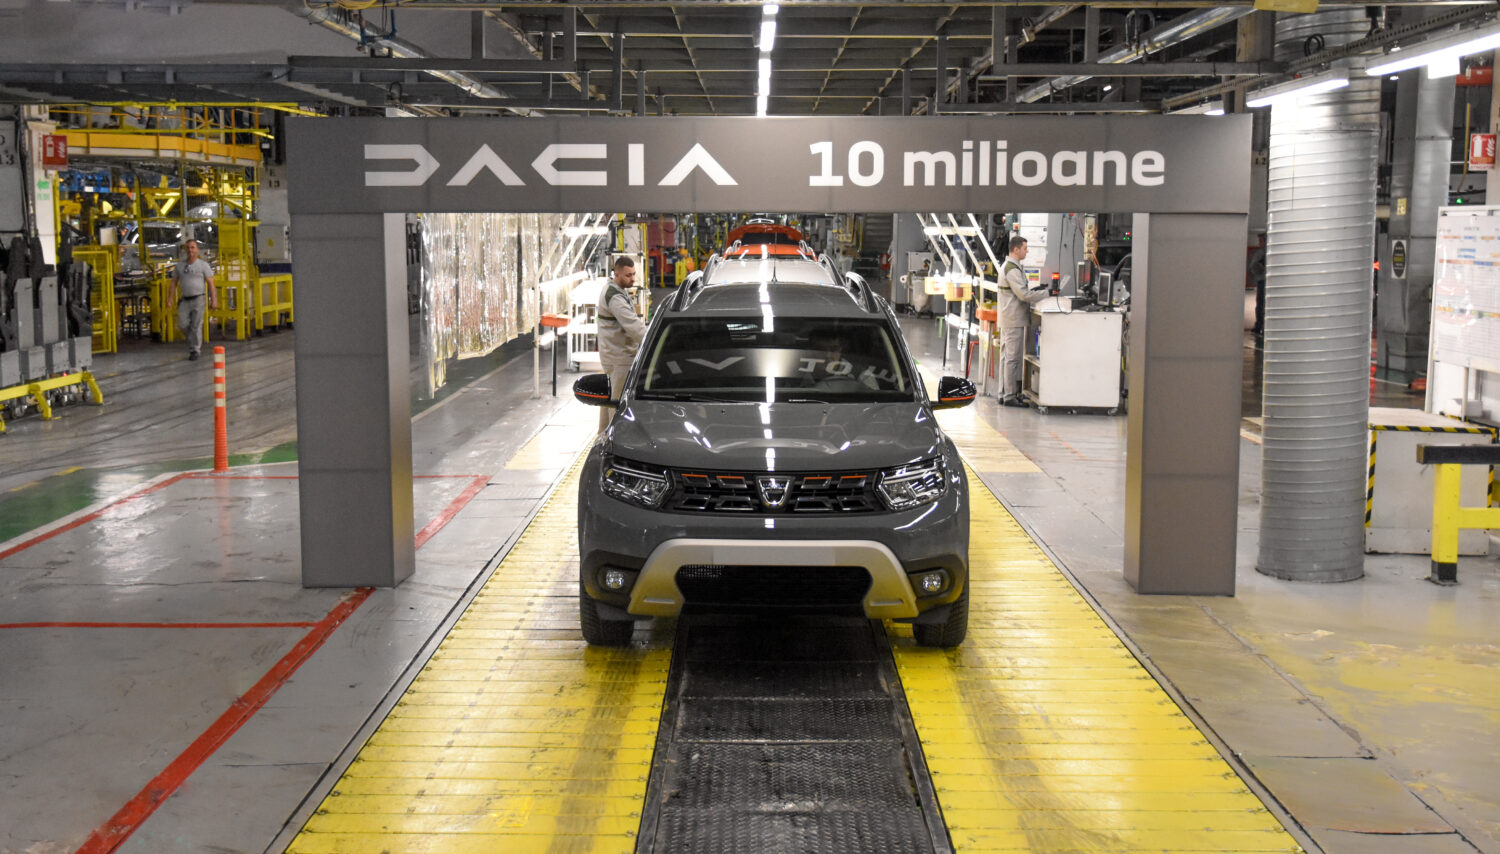 2022 - 10 Millions de Dacia produites